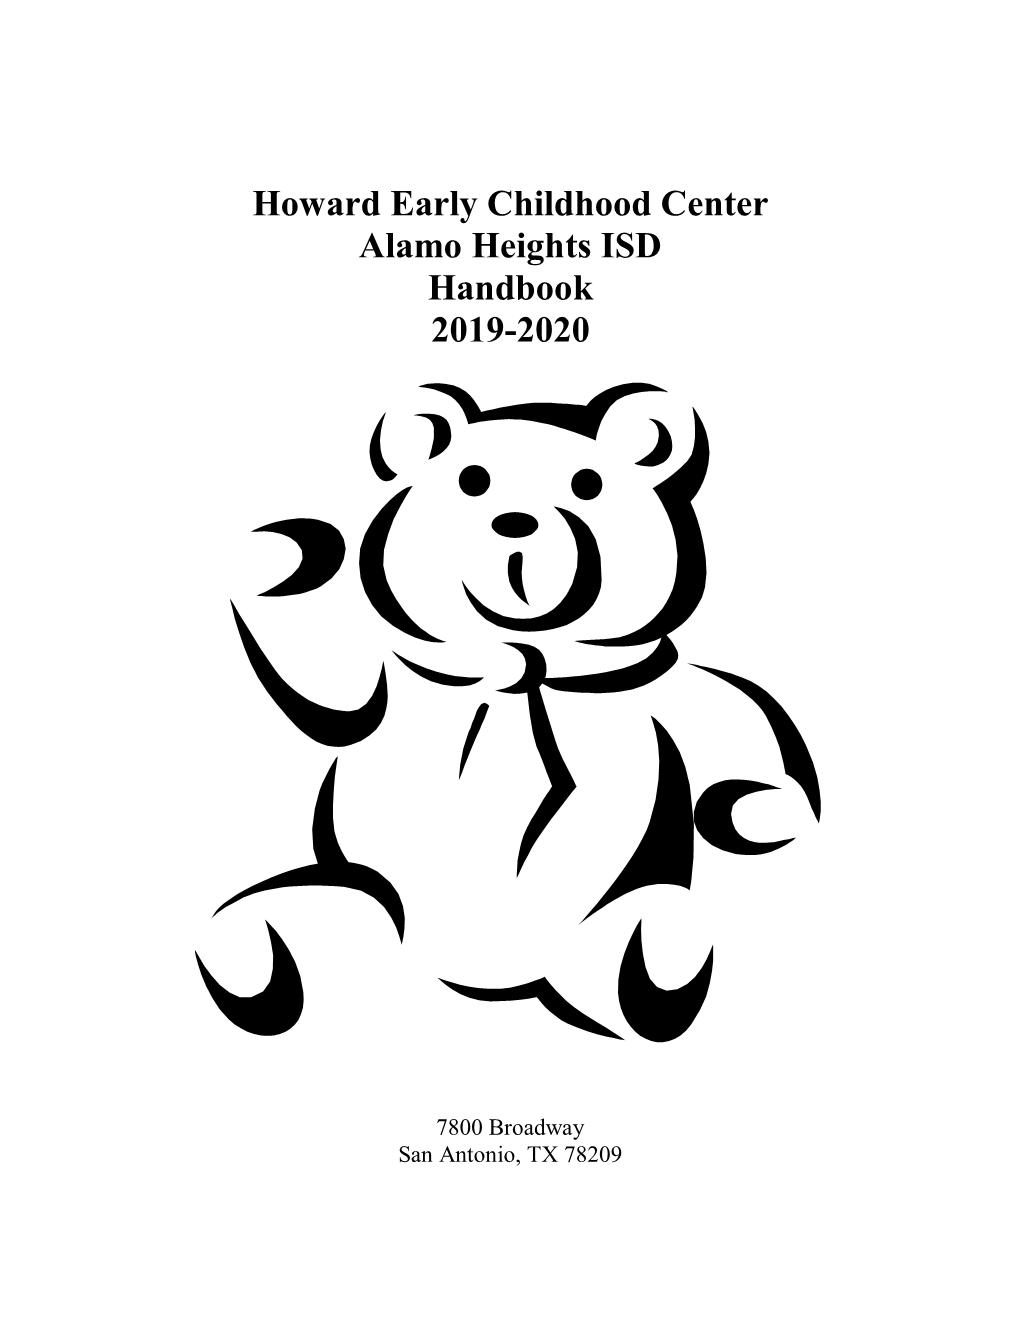 Howard Early Childhood Center Alamo Heights ISD Handbook 2019-2020